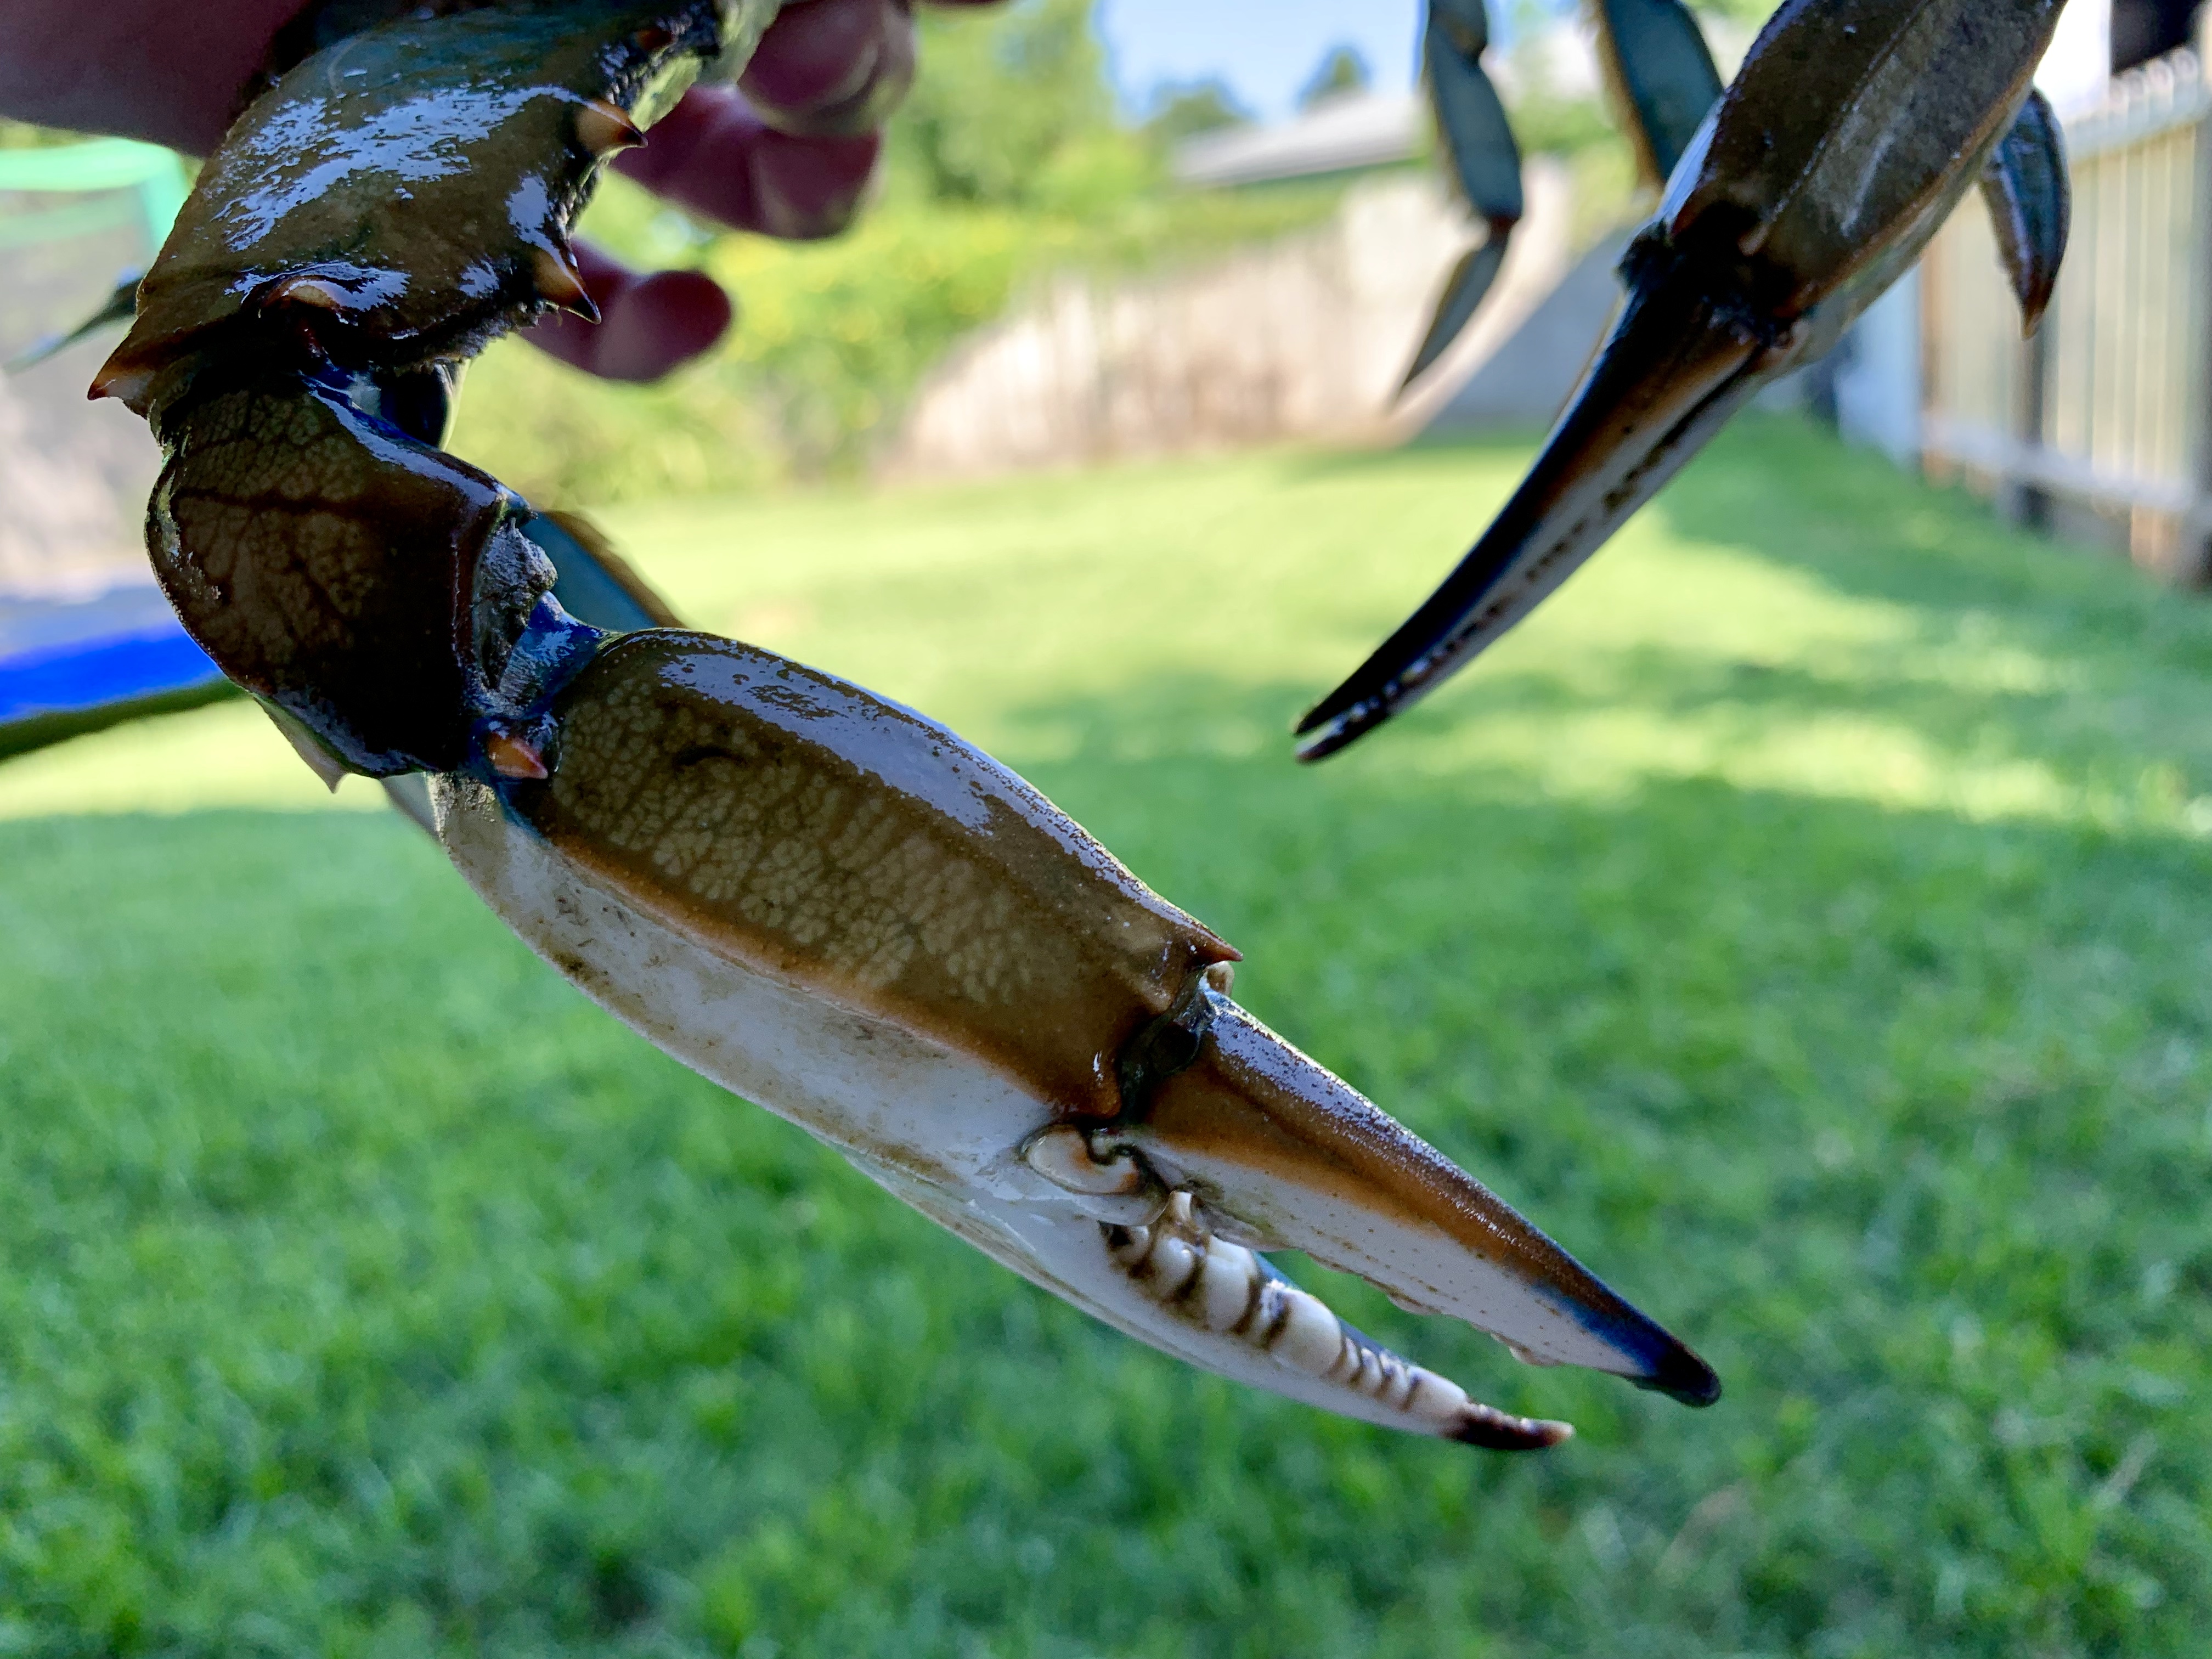 Crabbing along Texas coast geared toward simplicity, fun, food